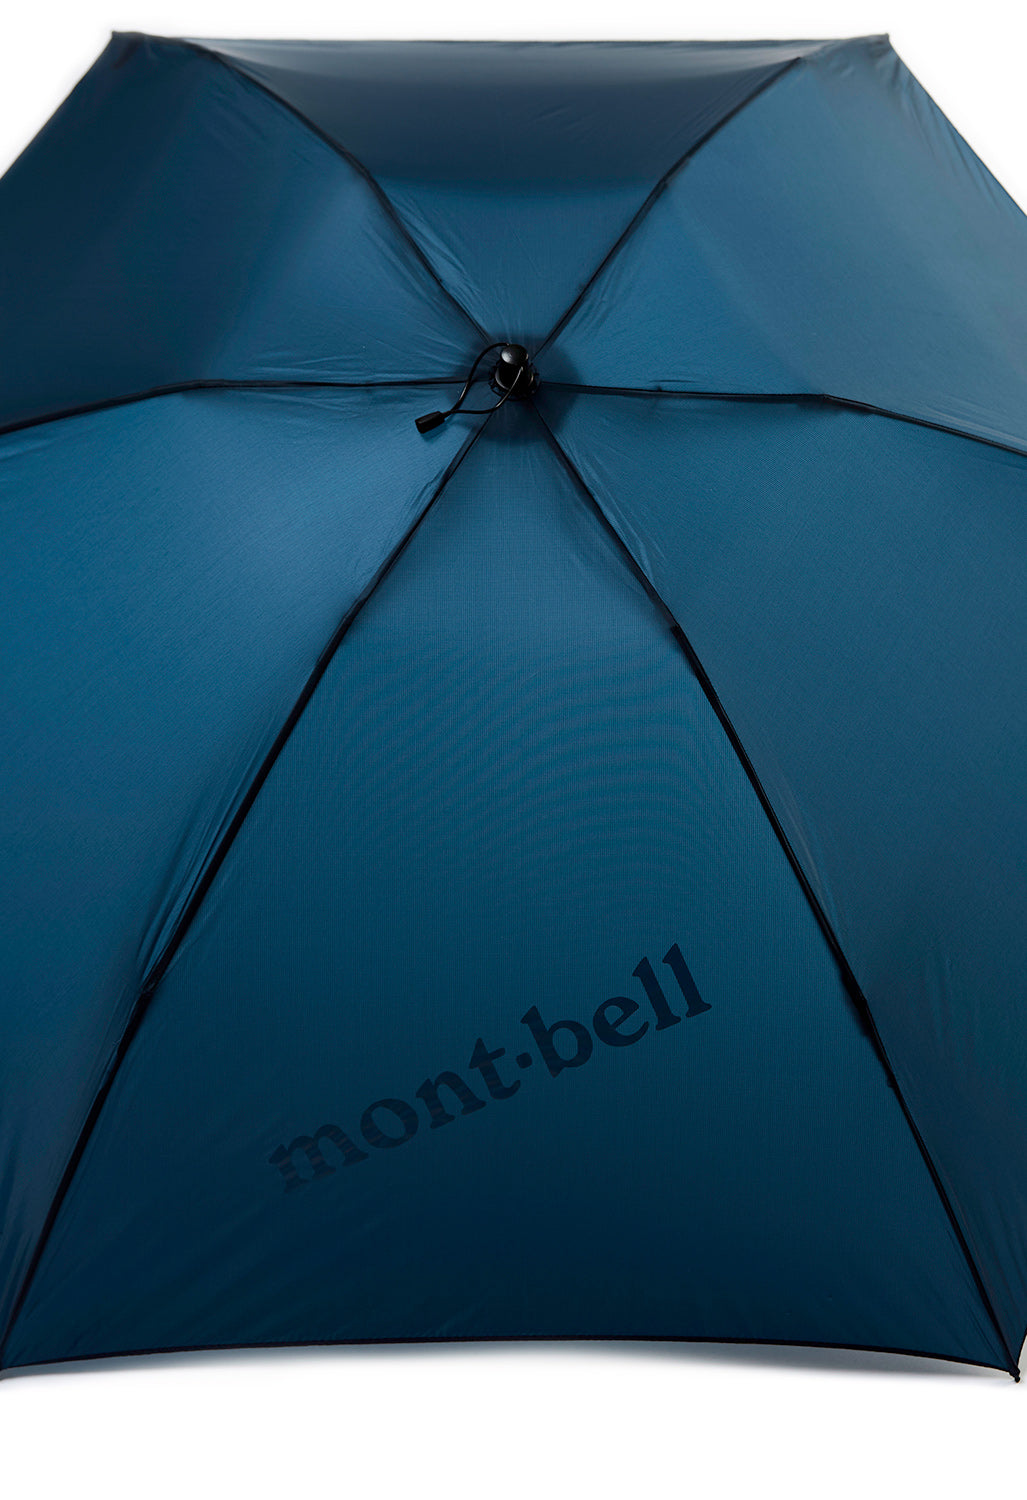 Montbell Travel Umbrella - Blue Black